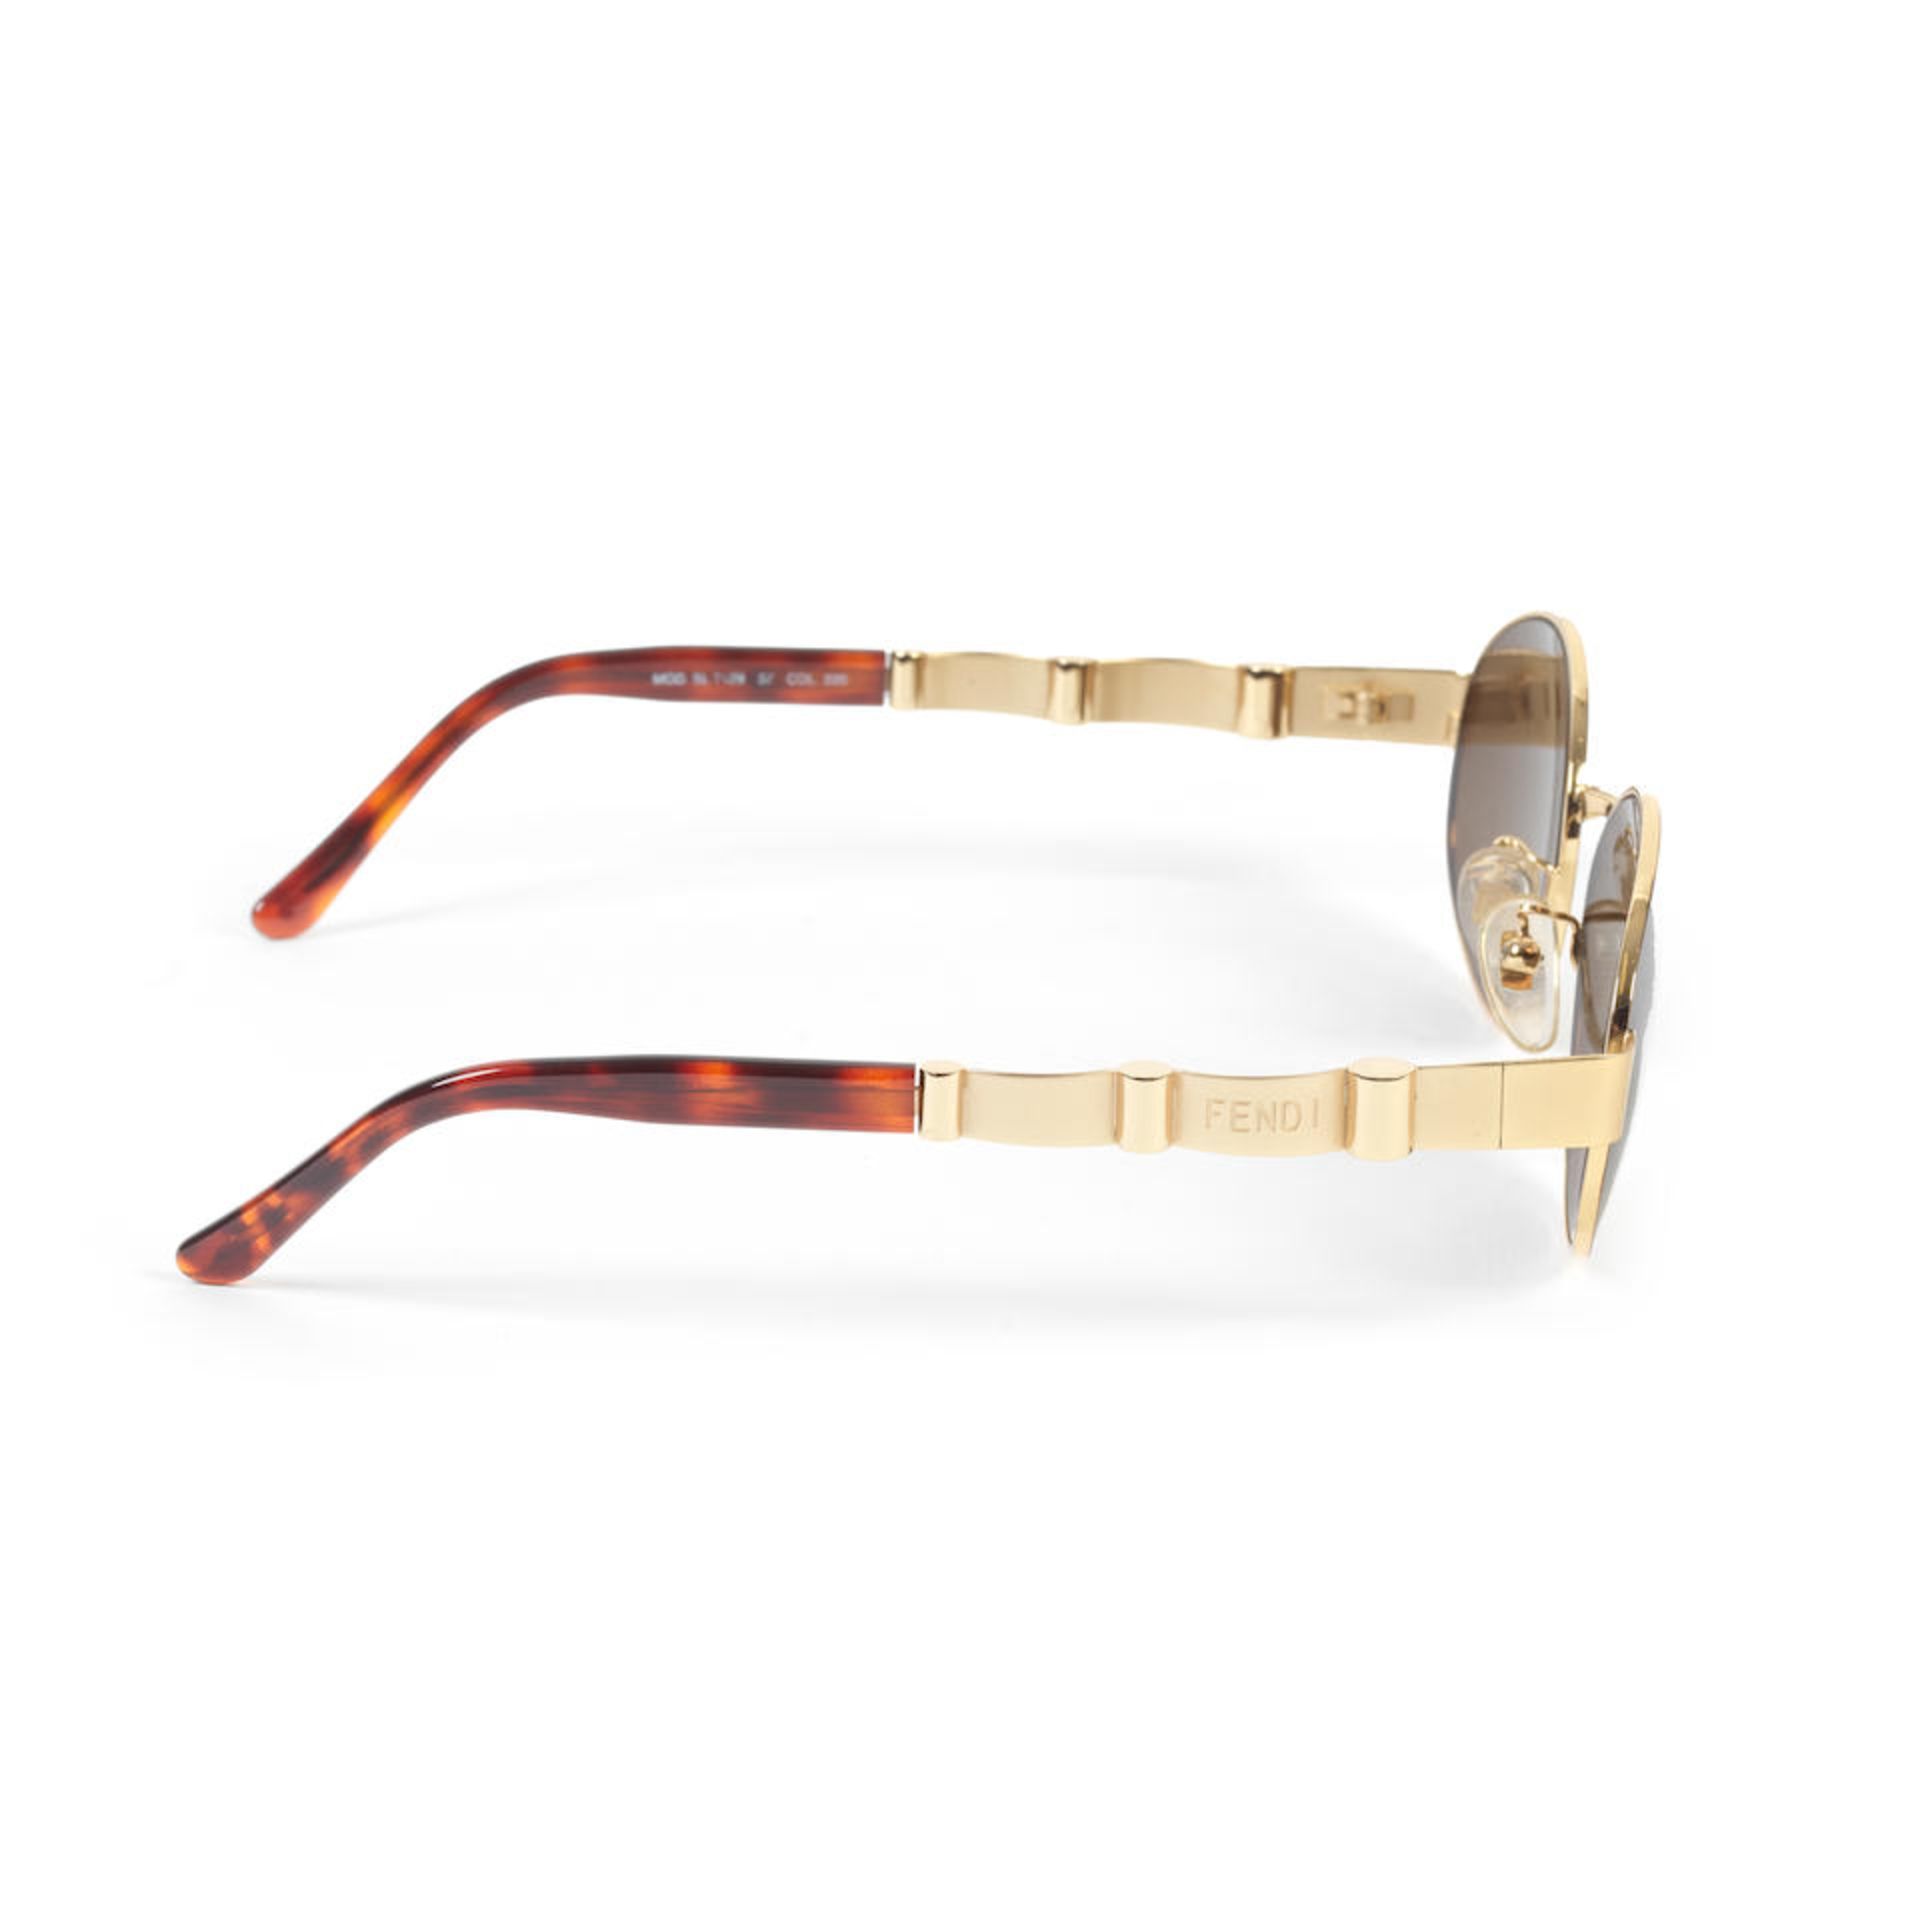 Fendi: a Pair of Oval Sunglasses - Image 2 of 2